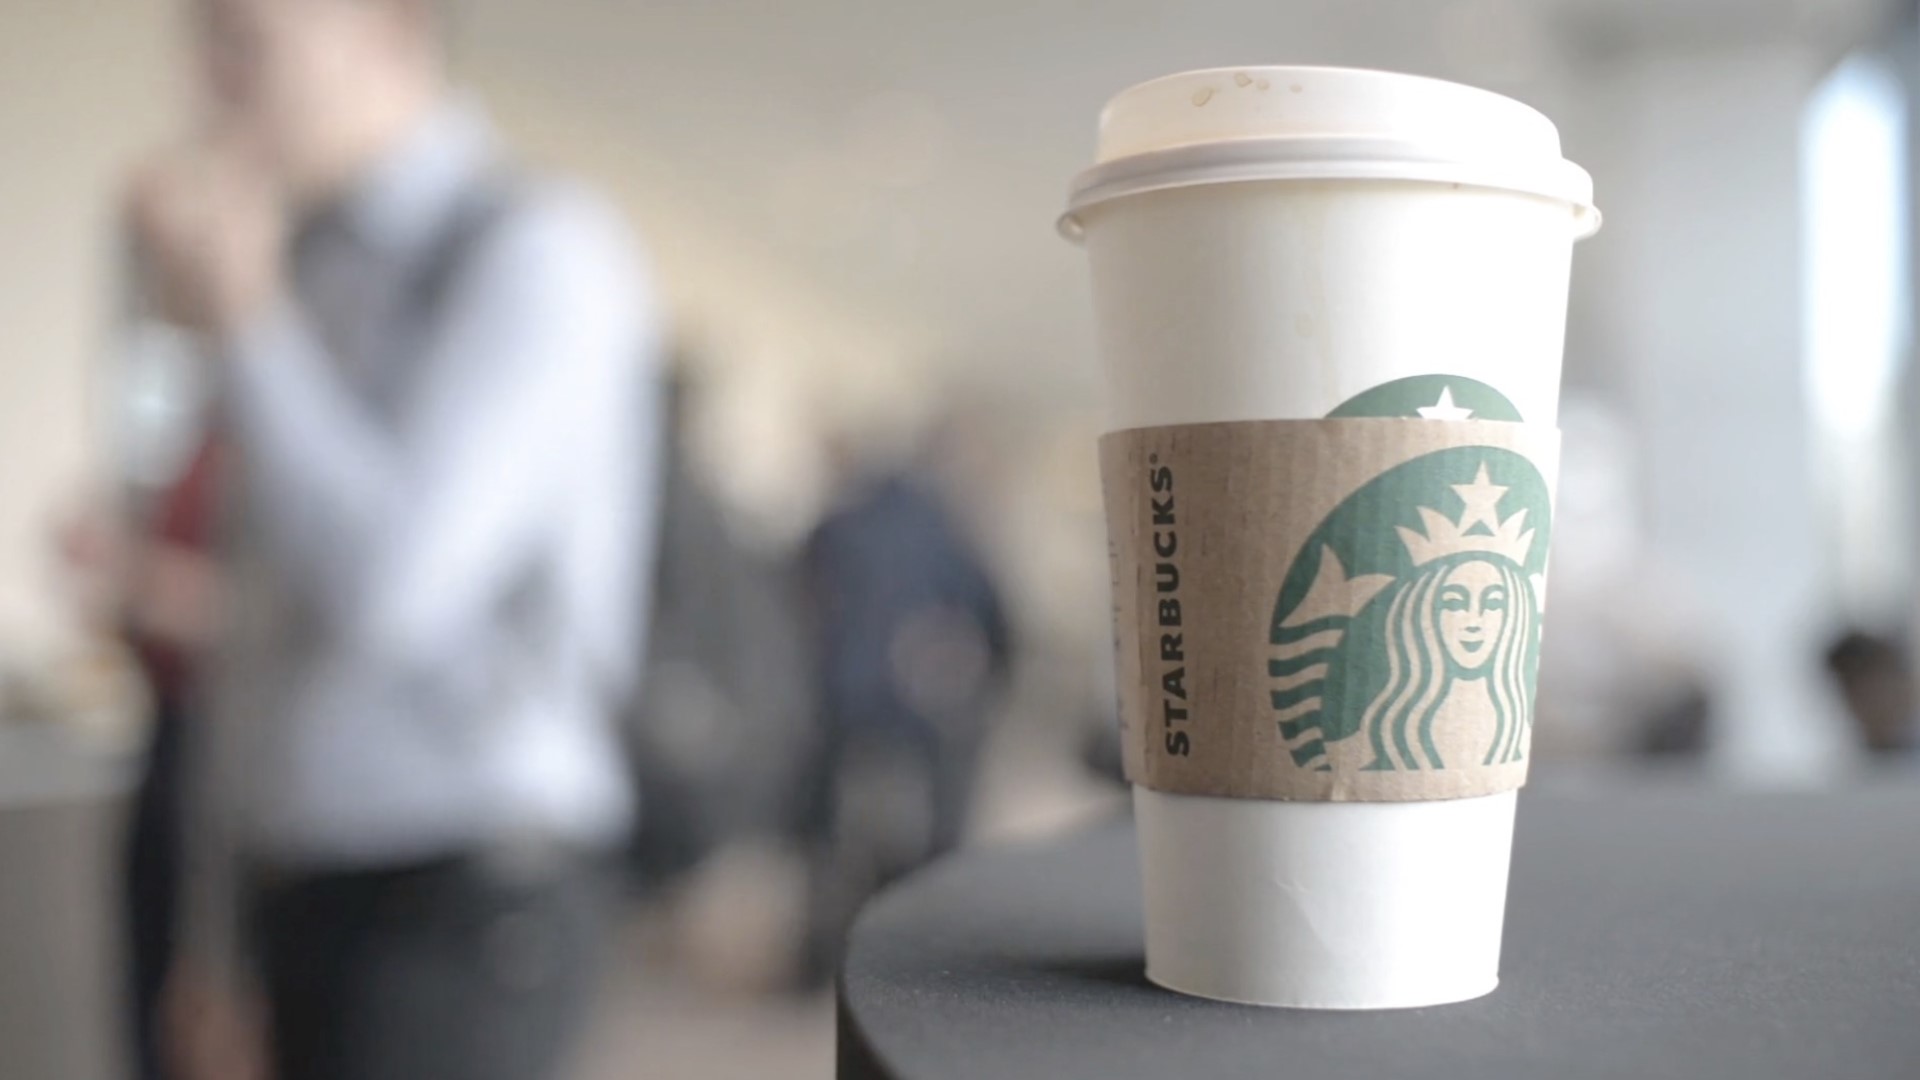 Starbucks has announced its plan for an environmentally-friendly agenda. Veuer's Mercer Morrison has the story.